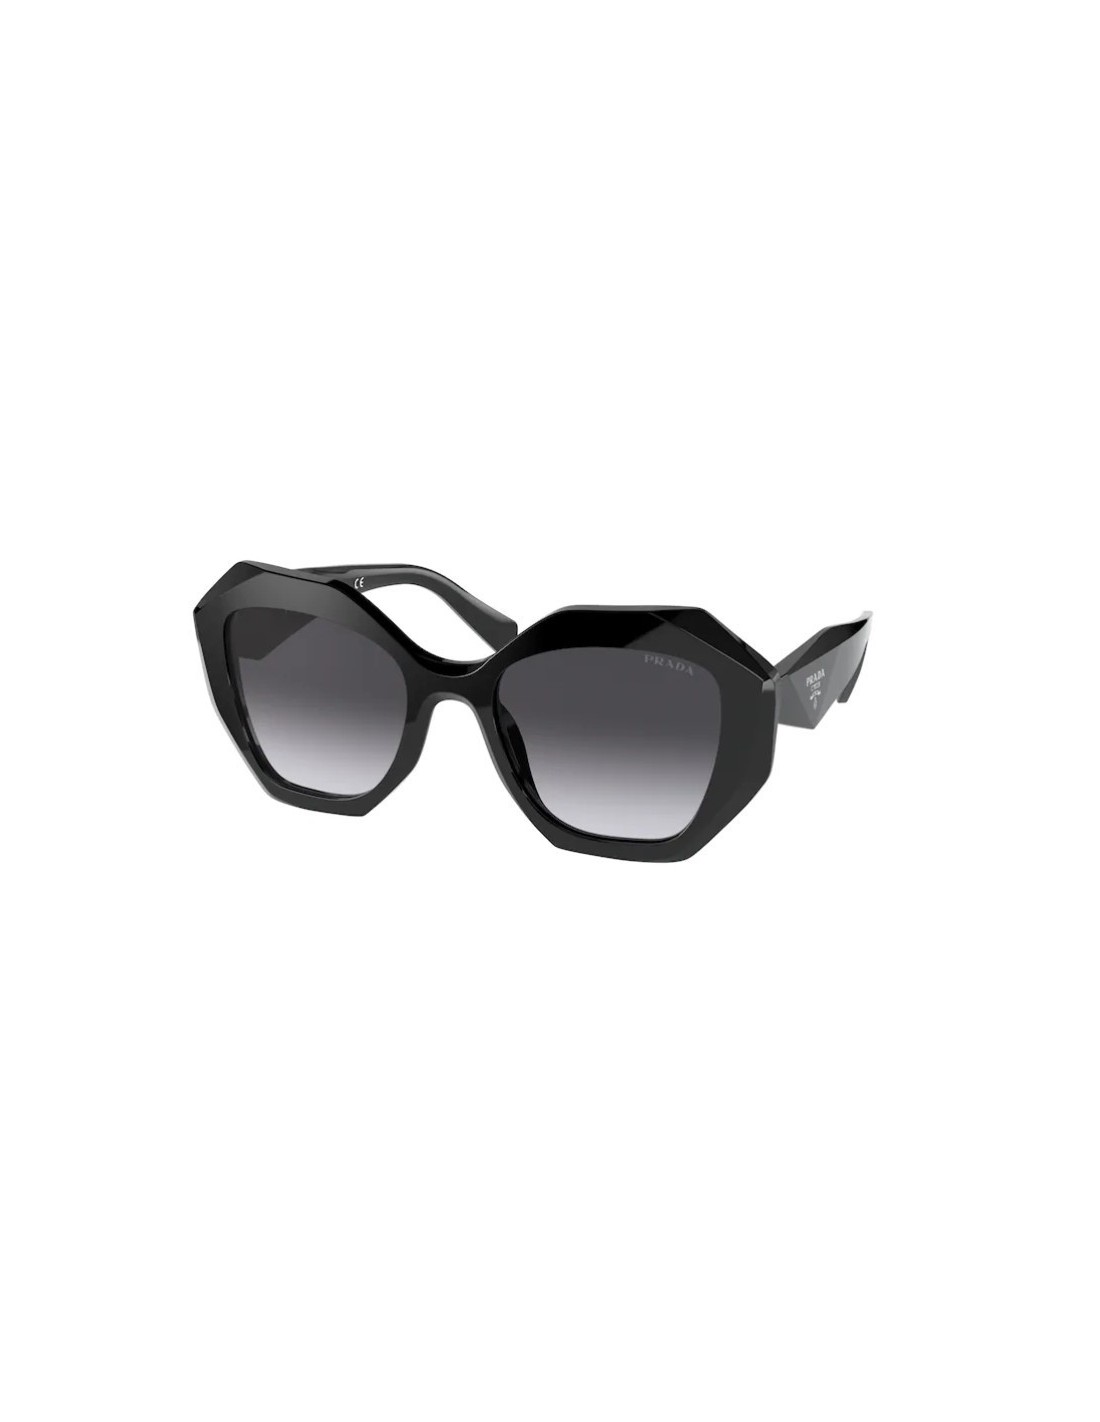 Prada First Copy Sunglasses - Sunglasses Villa